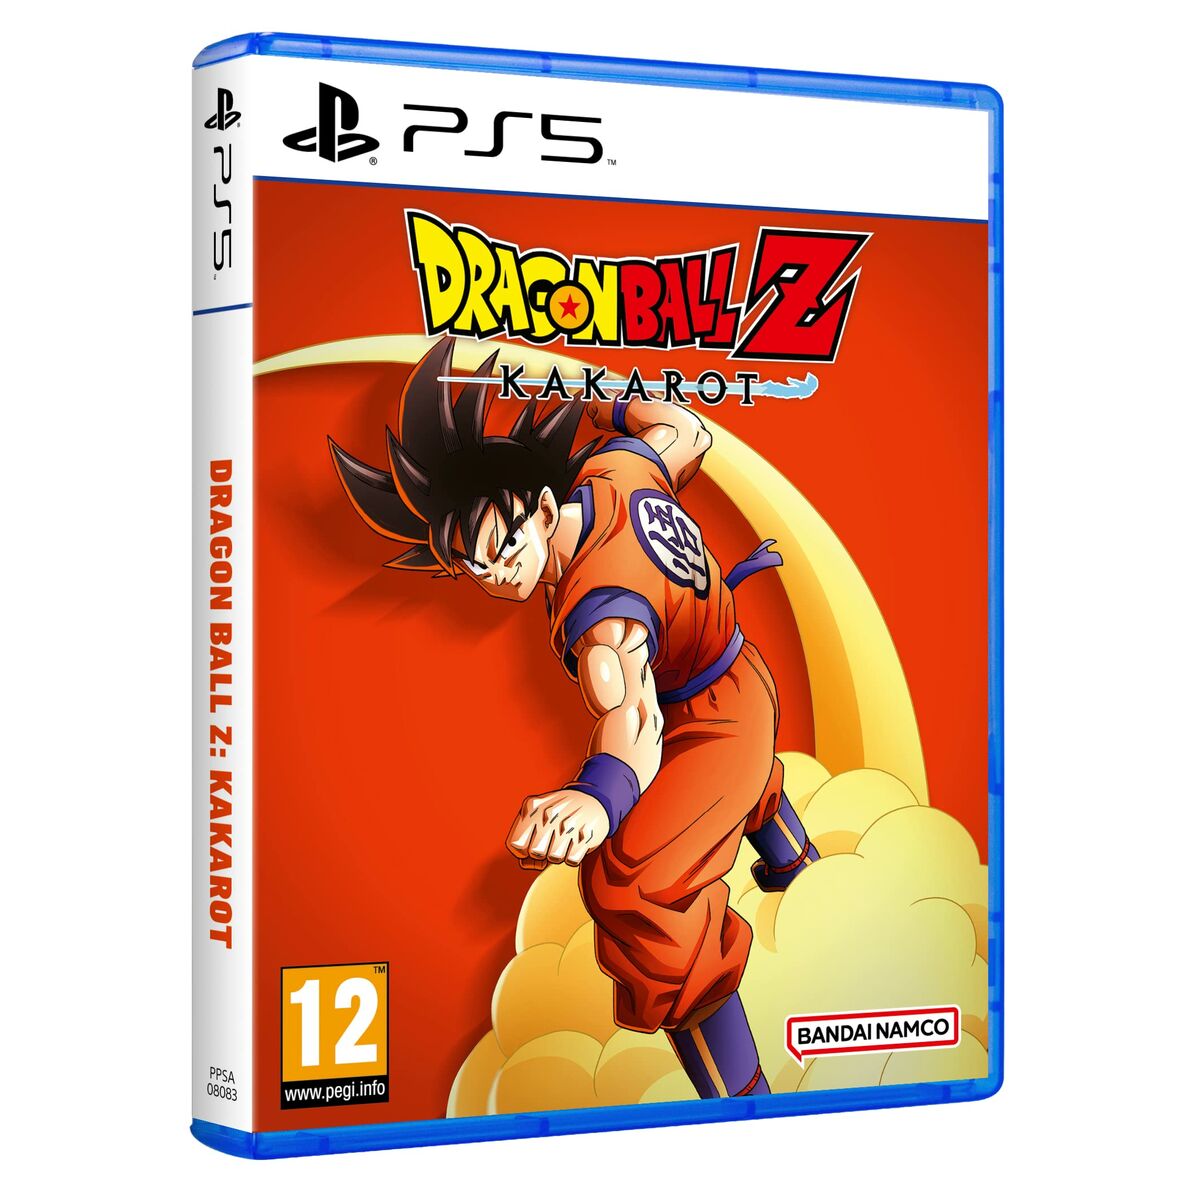 PlayStation 5 Video Game Bandai Namco Dragon Ball Z: Kakarot